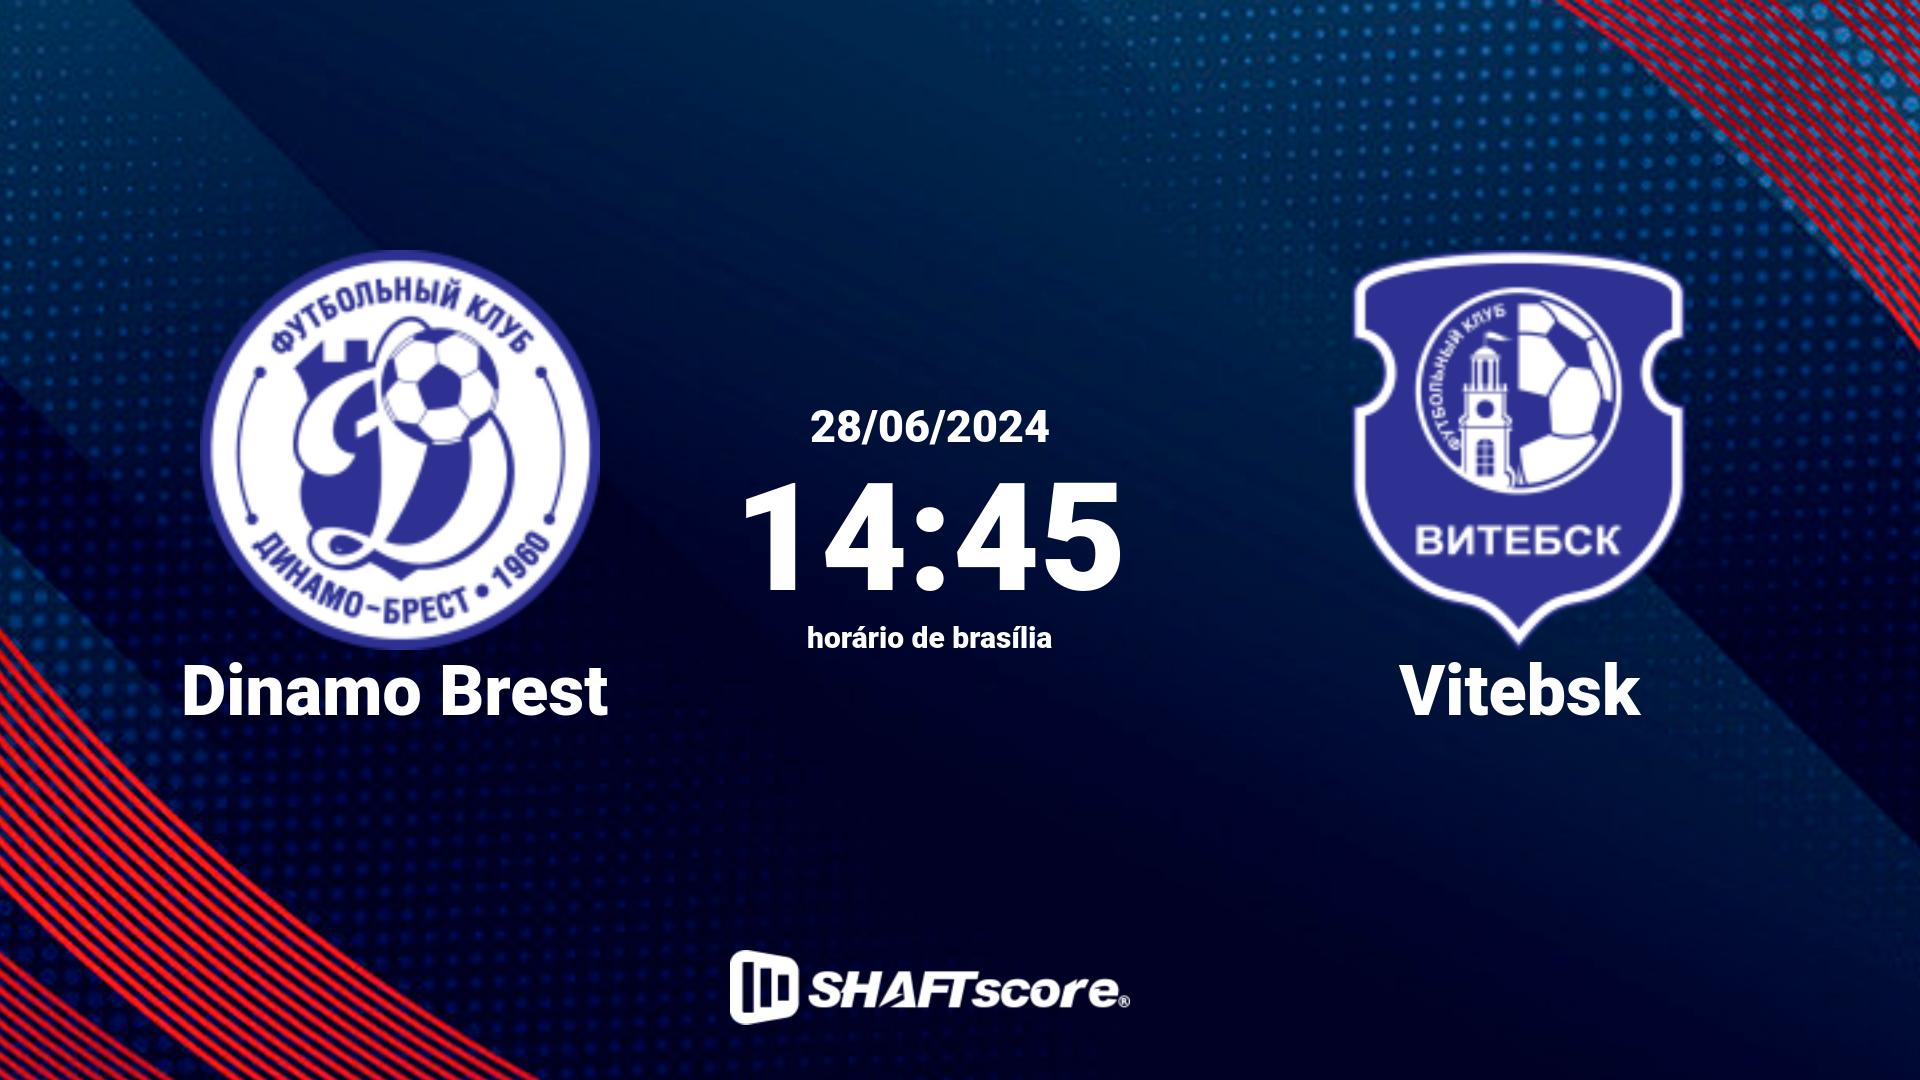 Estatísticas do jogo Dinamo Brest vs Vitebsk 28.06 14:45